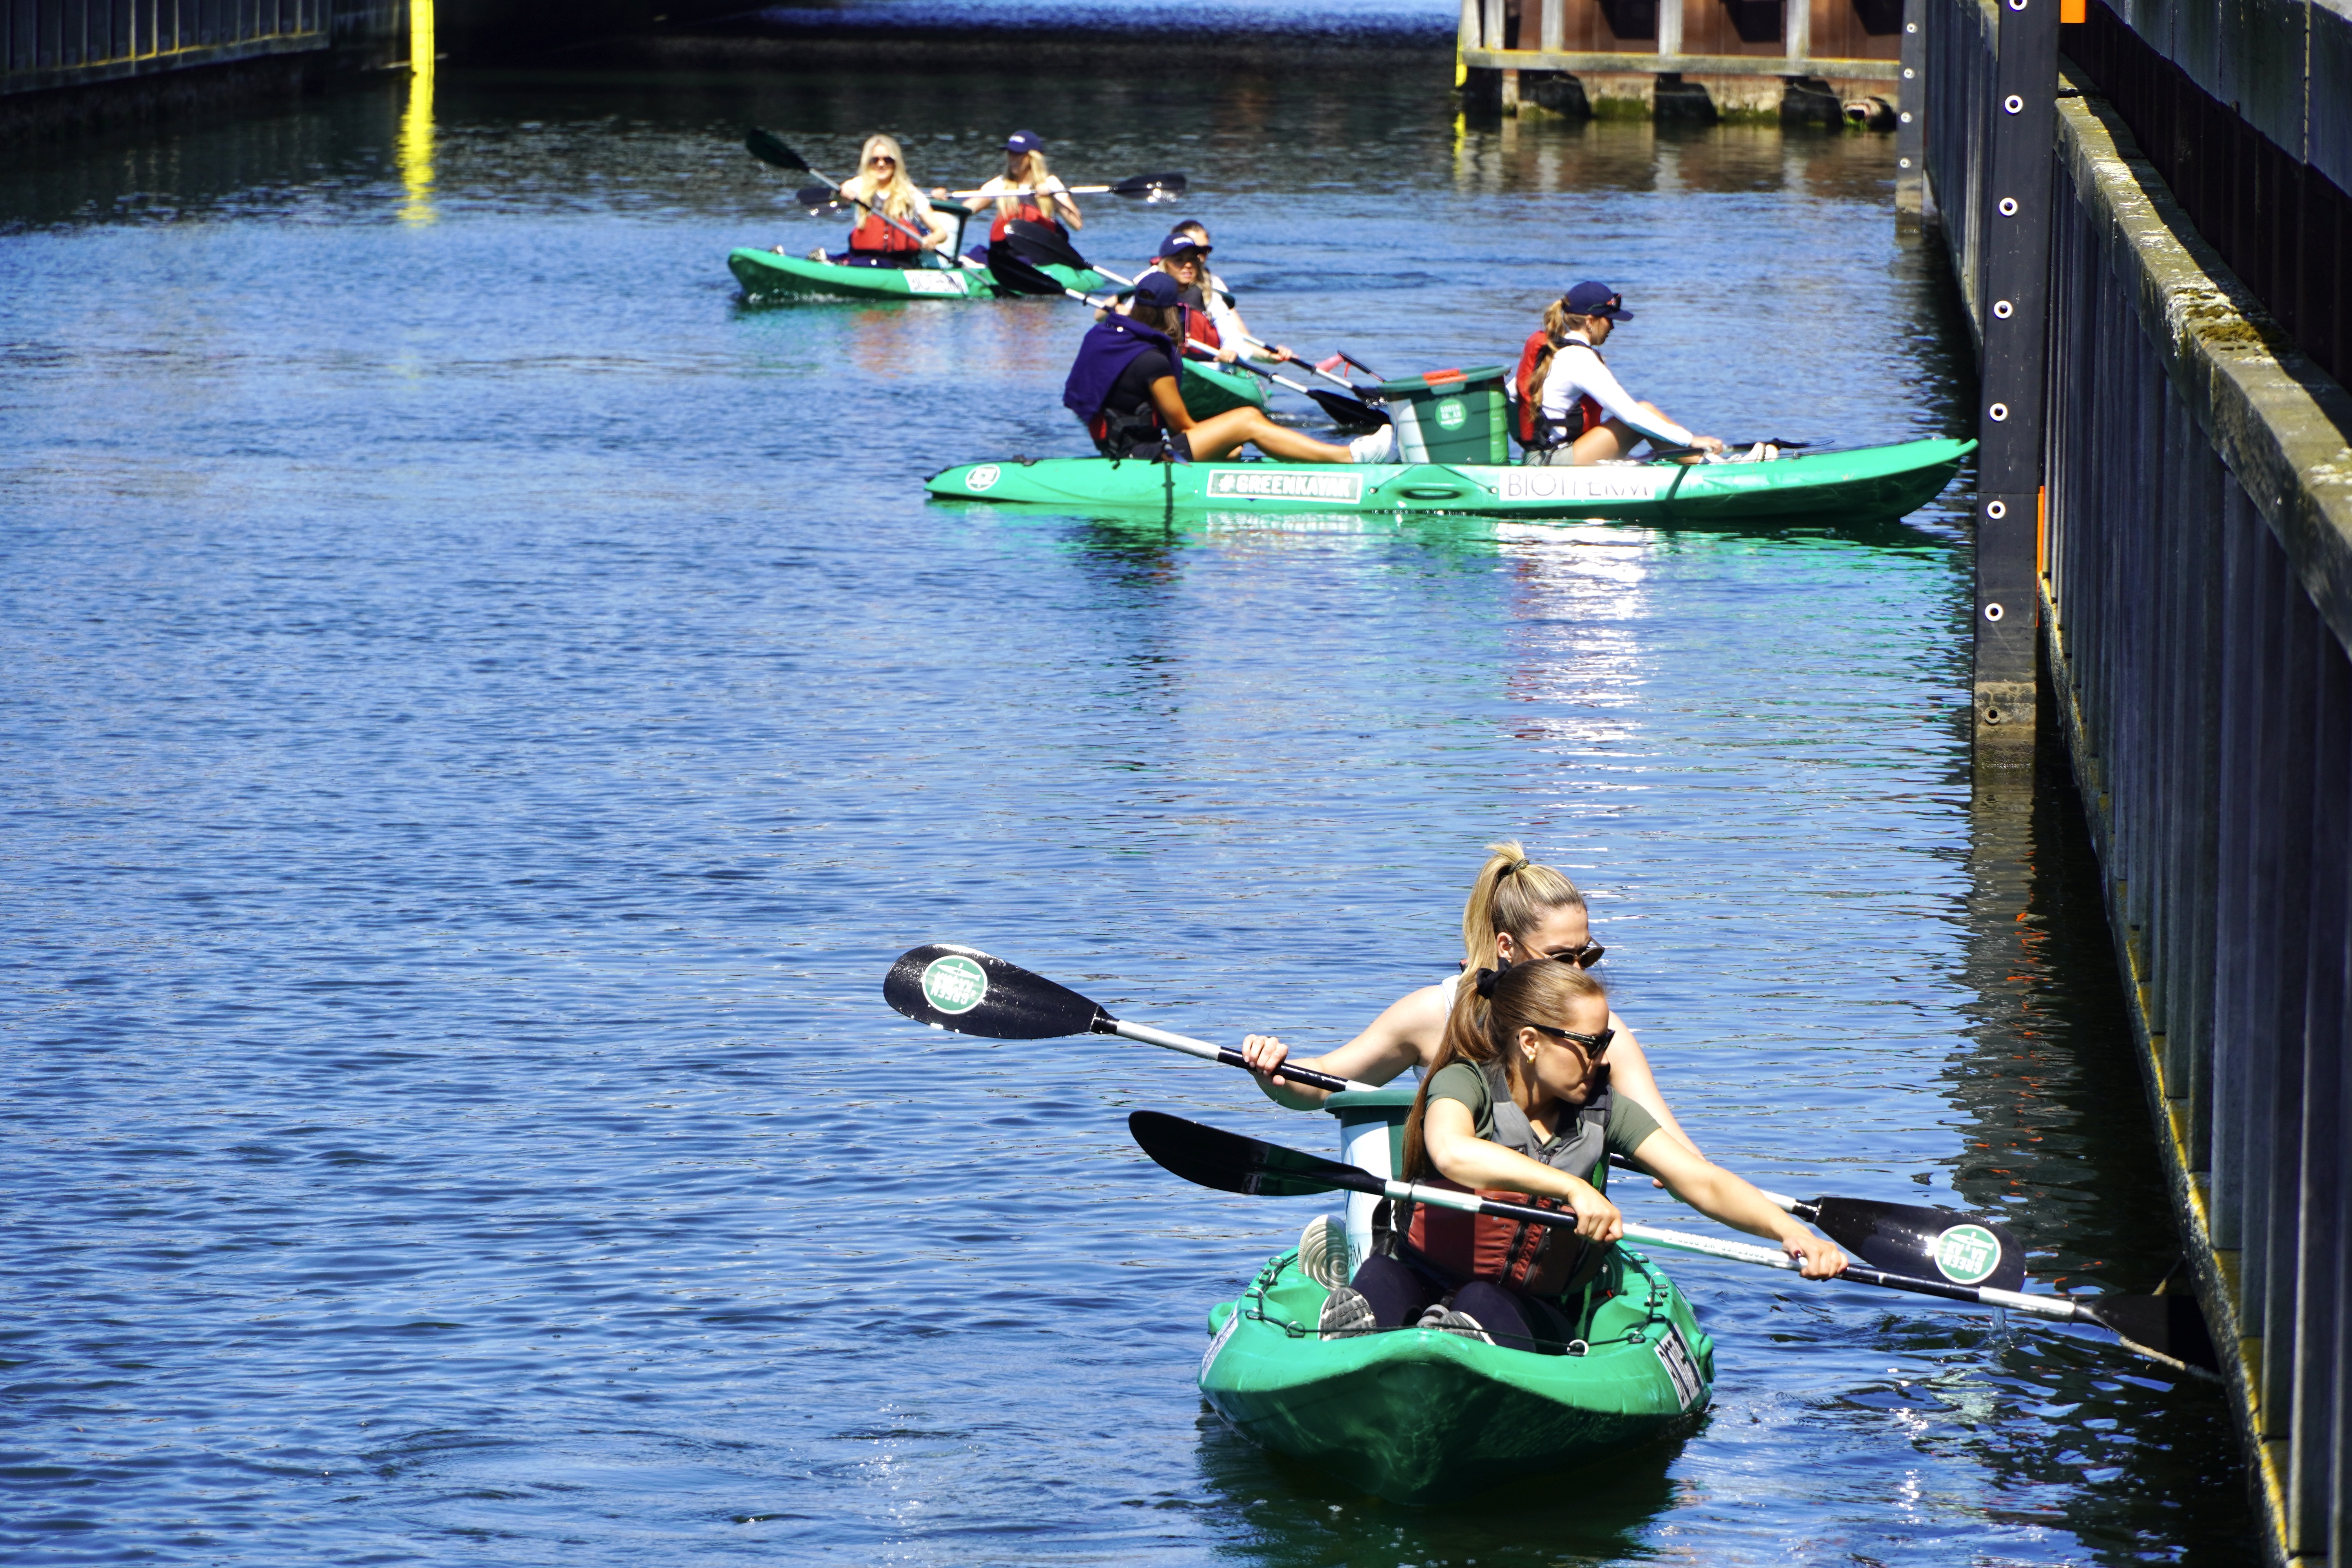 Get on a kayak and help make Copenhagen Harbour even cleaner!